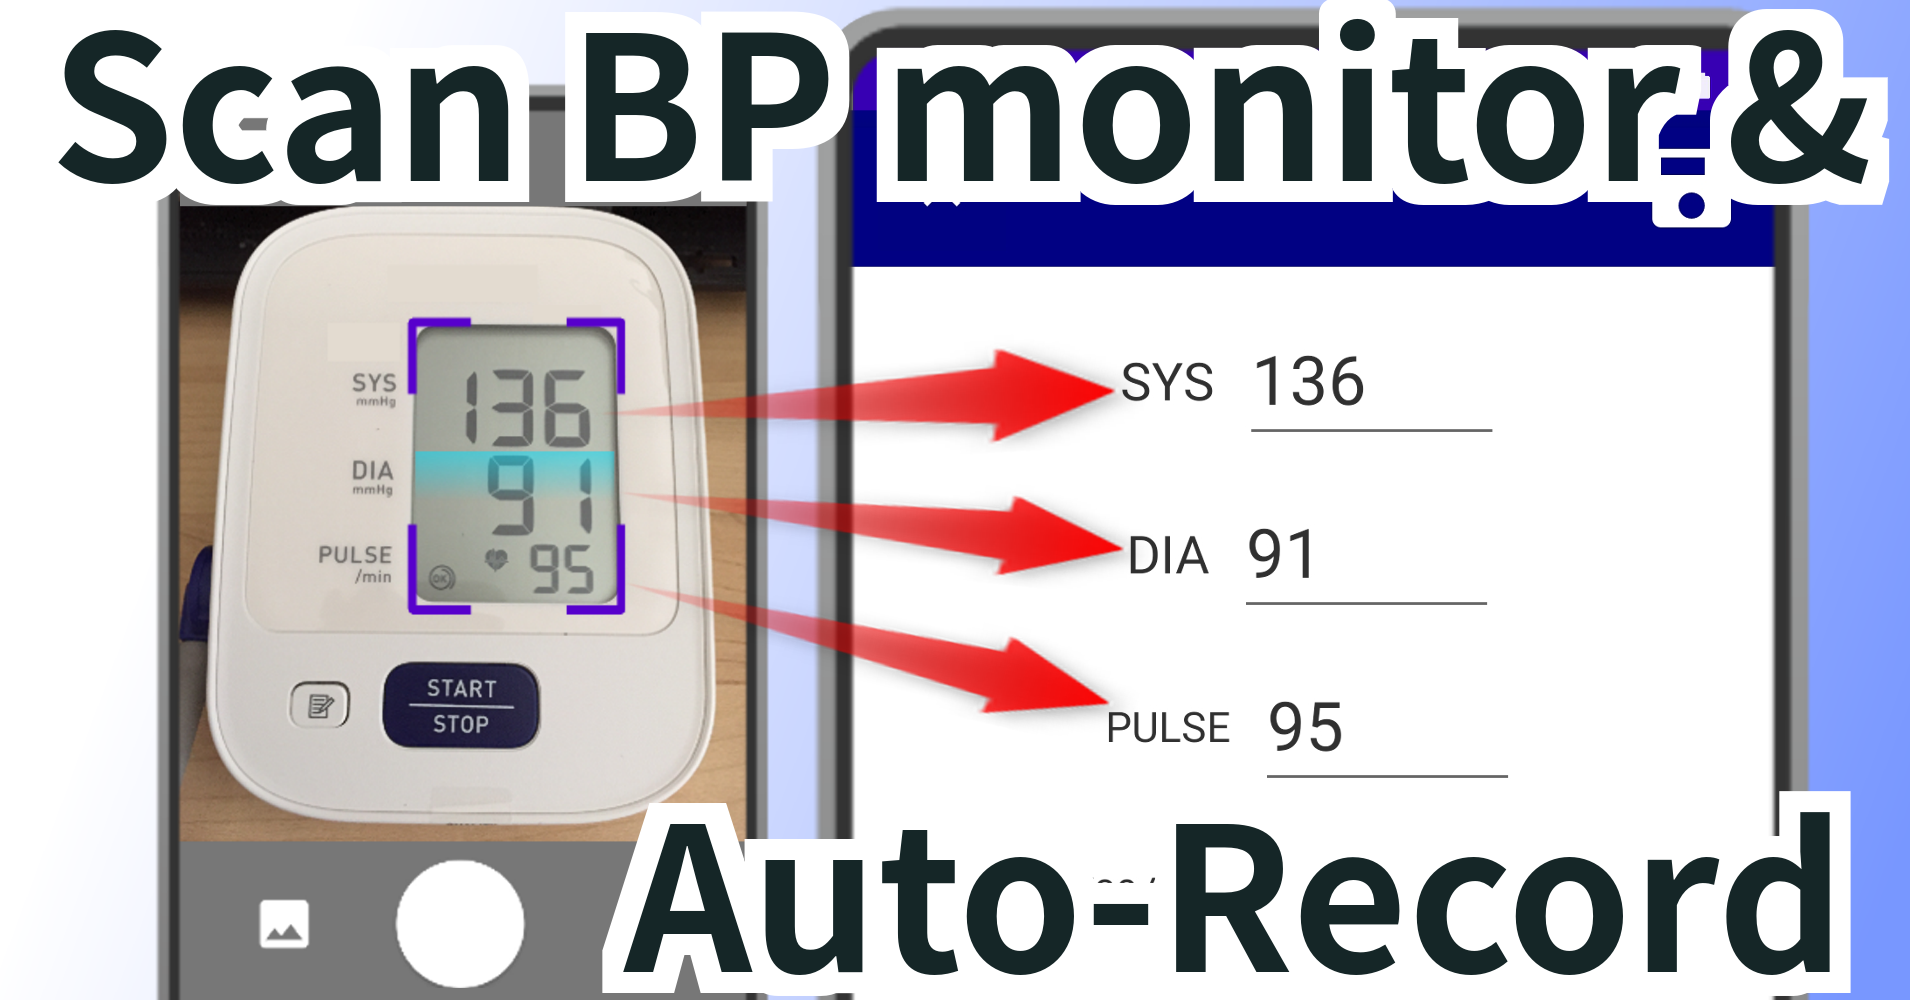 Blood Pressure App - SmartBP - Apps on Google Play